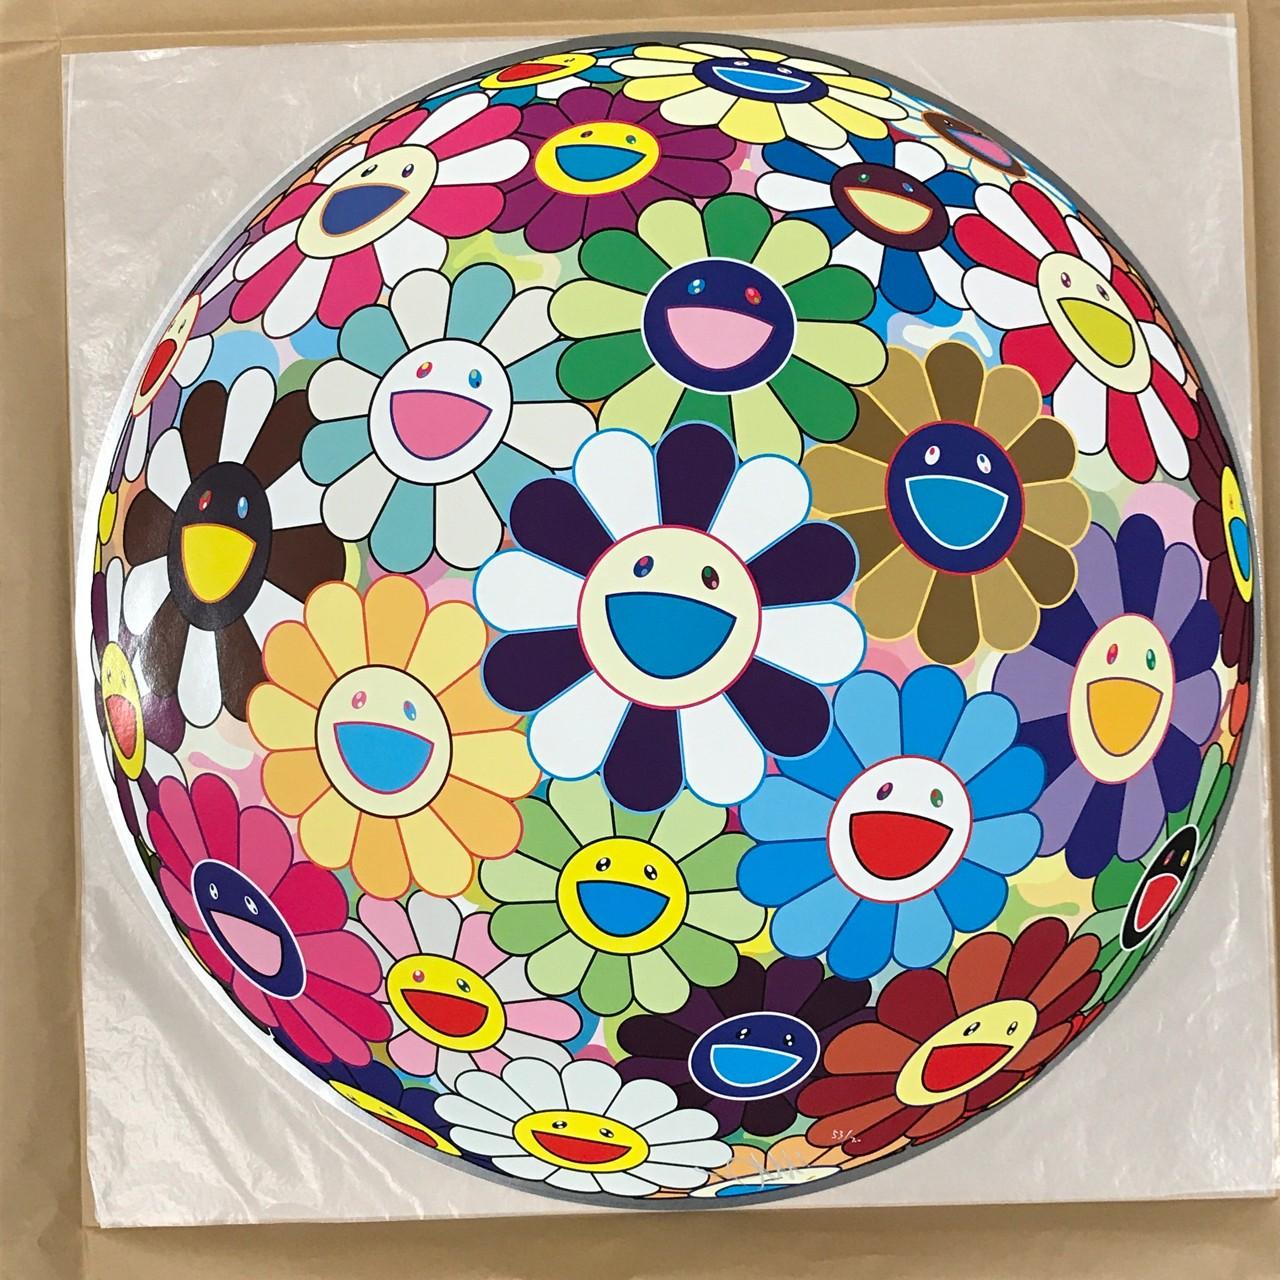 Flower Ball (3-D) Kindergarten. Limited Edition (print) by Murakami signed  - Print by Takashi Murakami